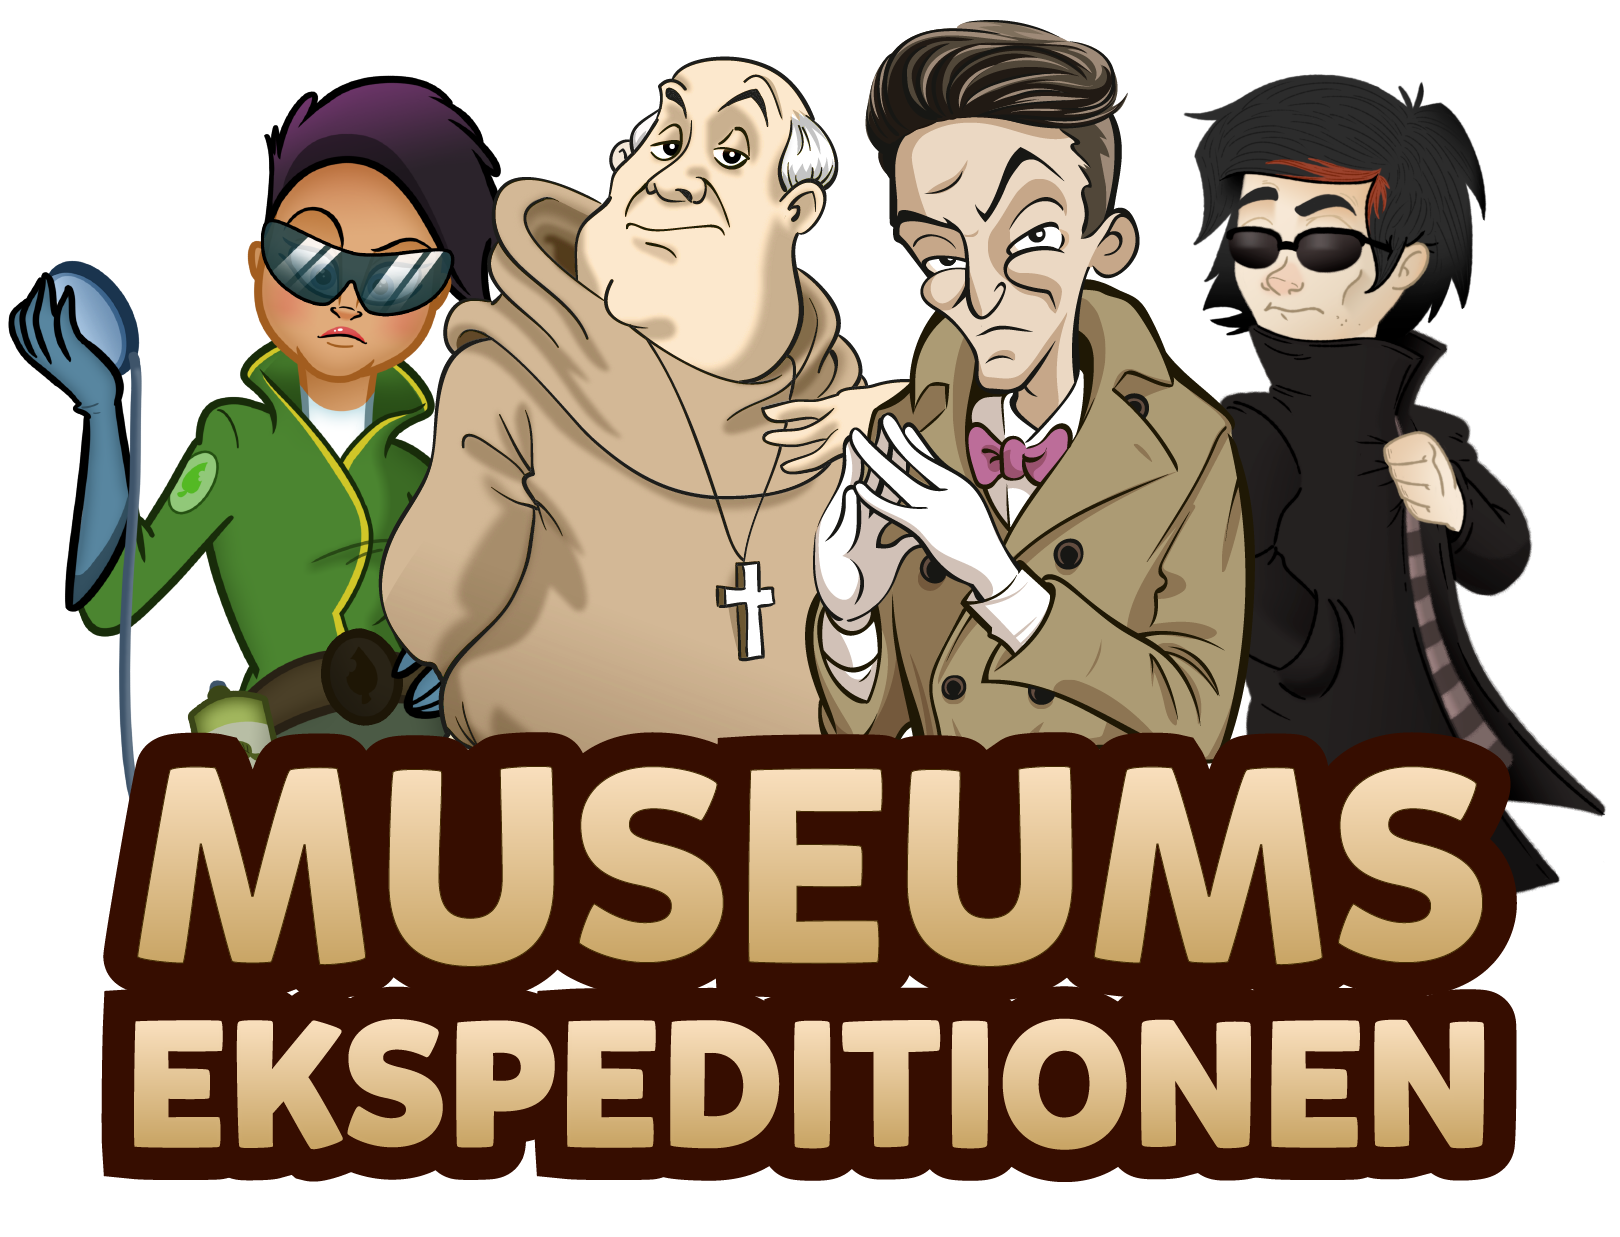 Useeum præsenterer MuseumsEkspeditionen 2019